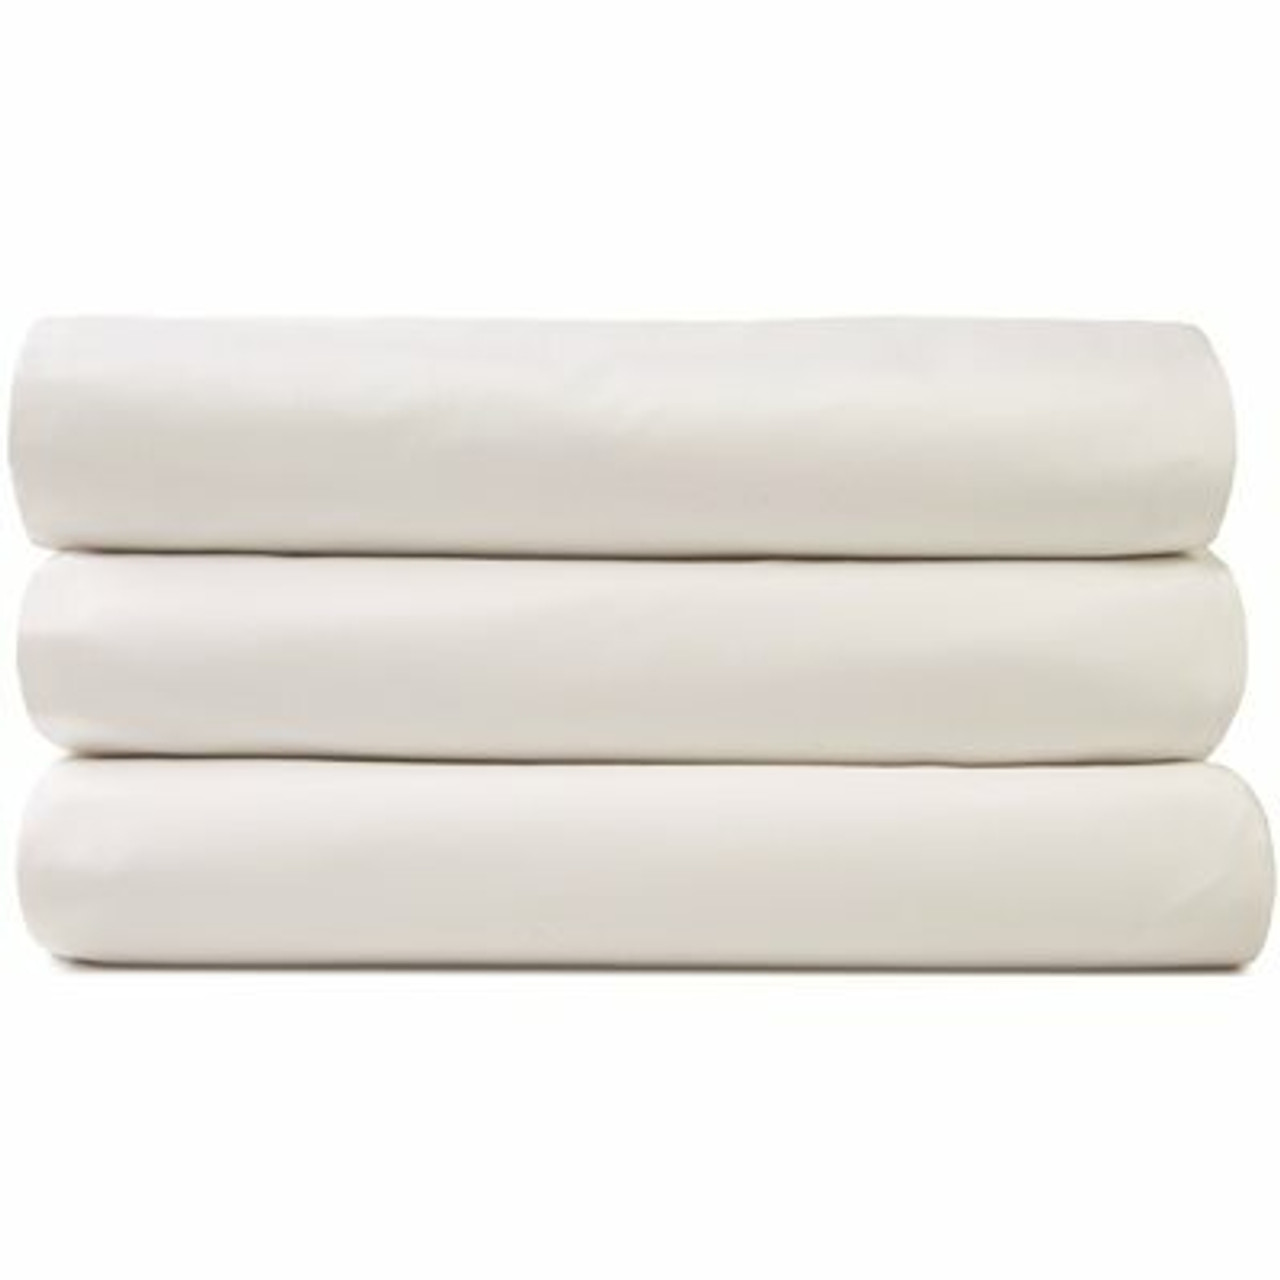 International Trading Co T250 Standard Pillow Case In White, Case Of 72